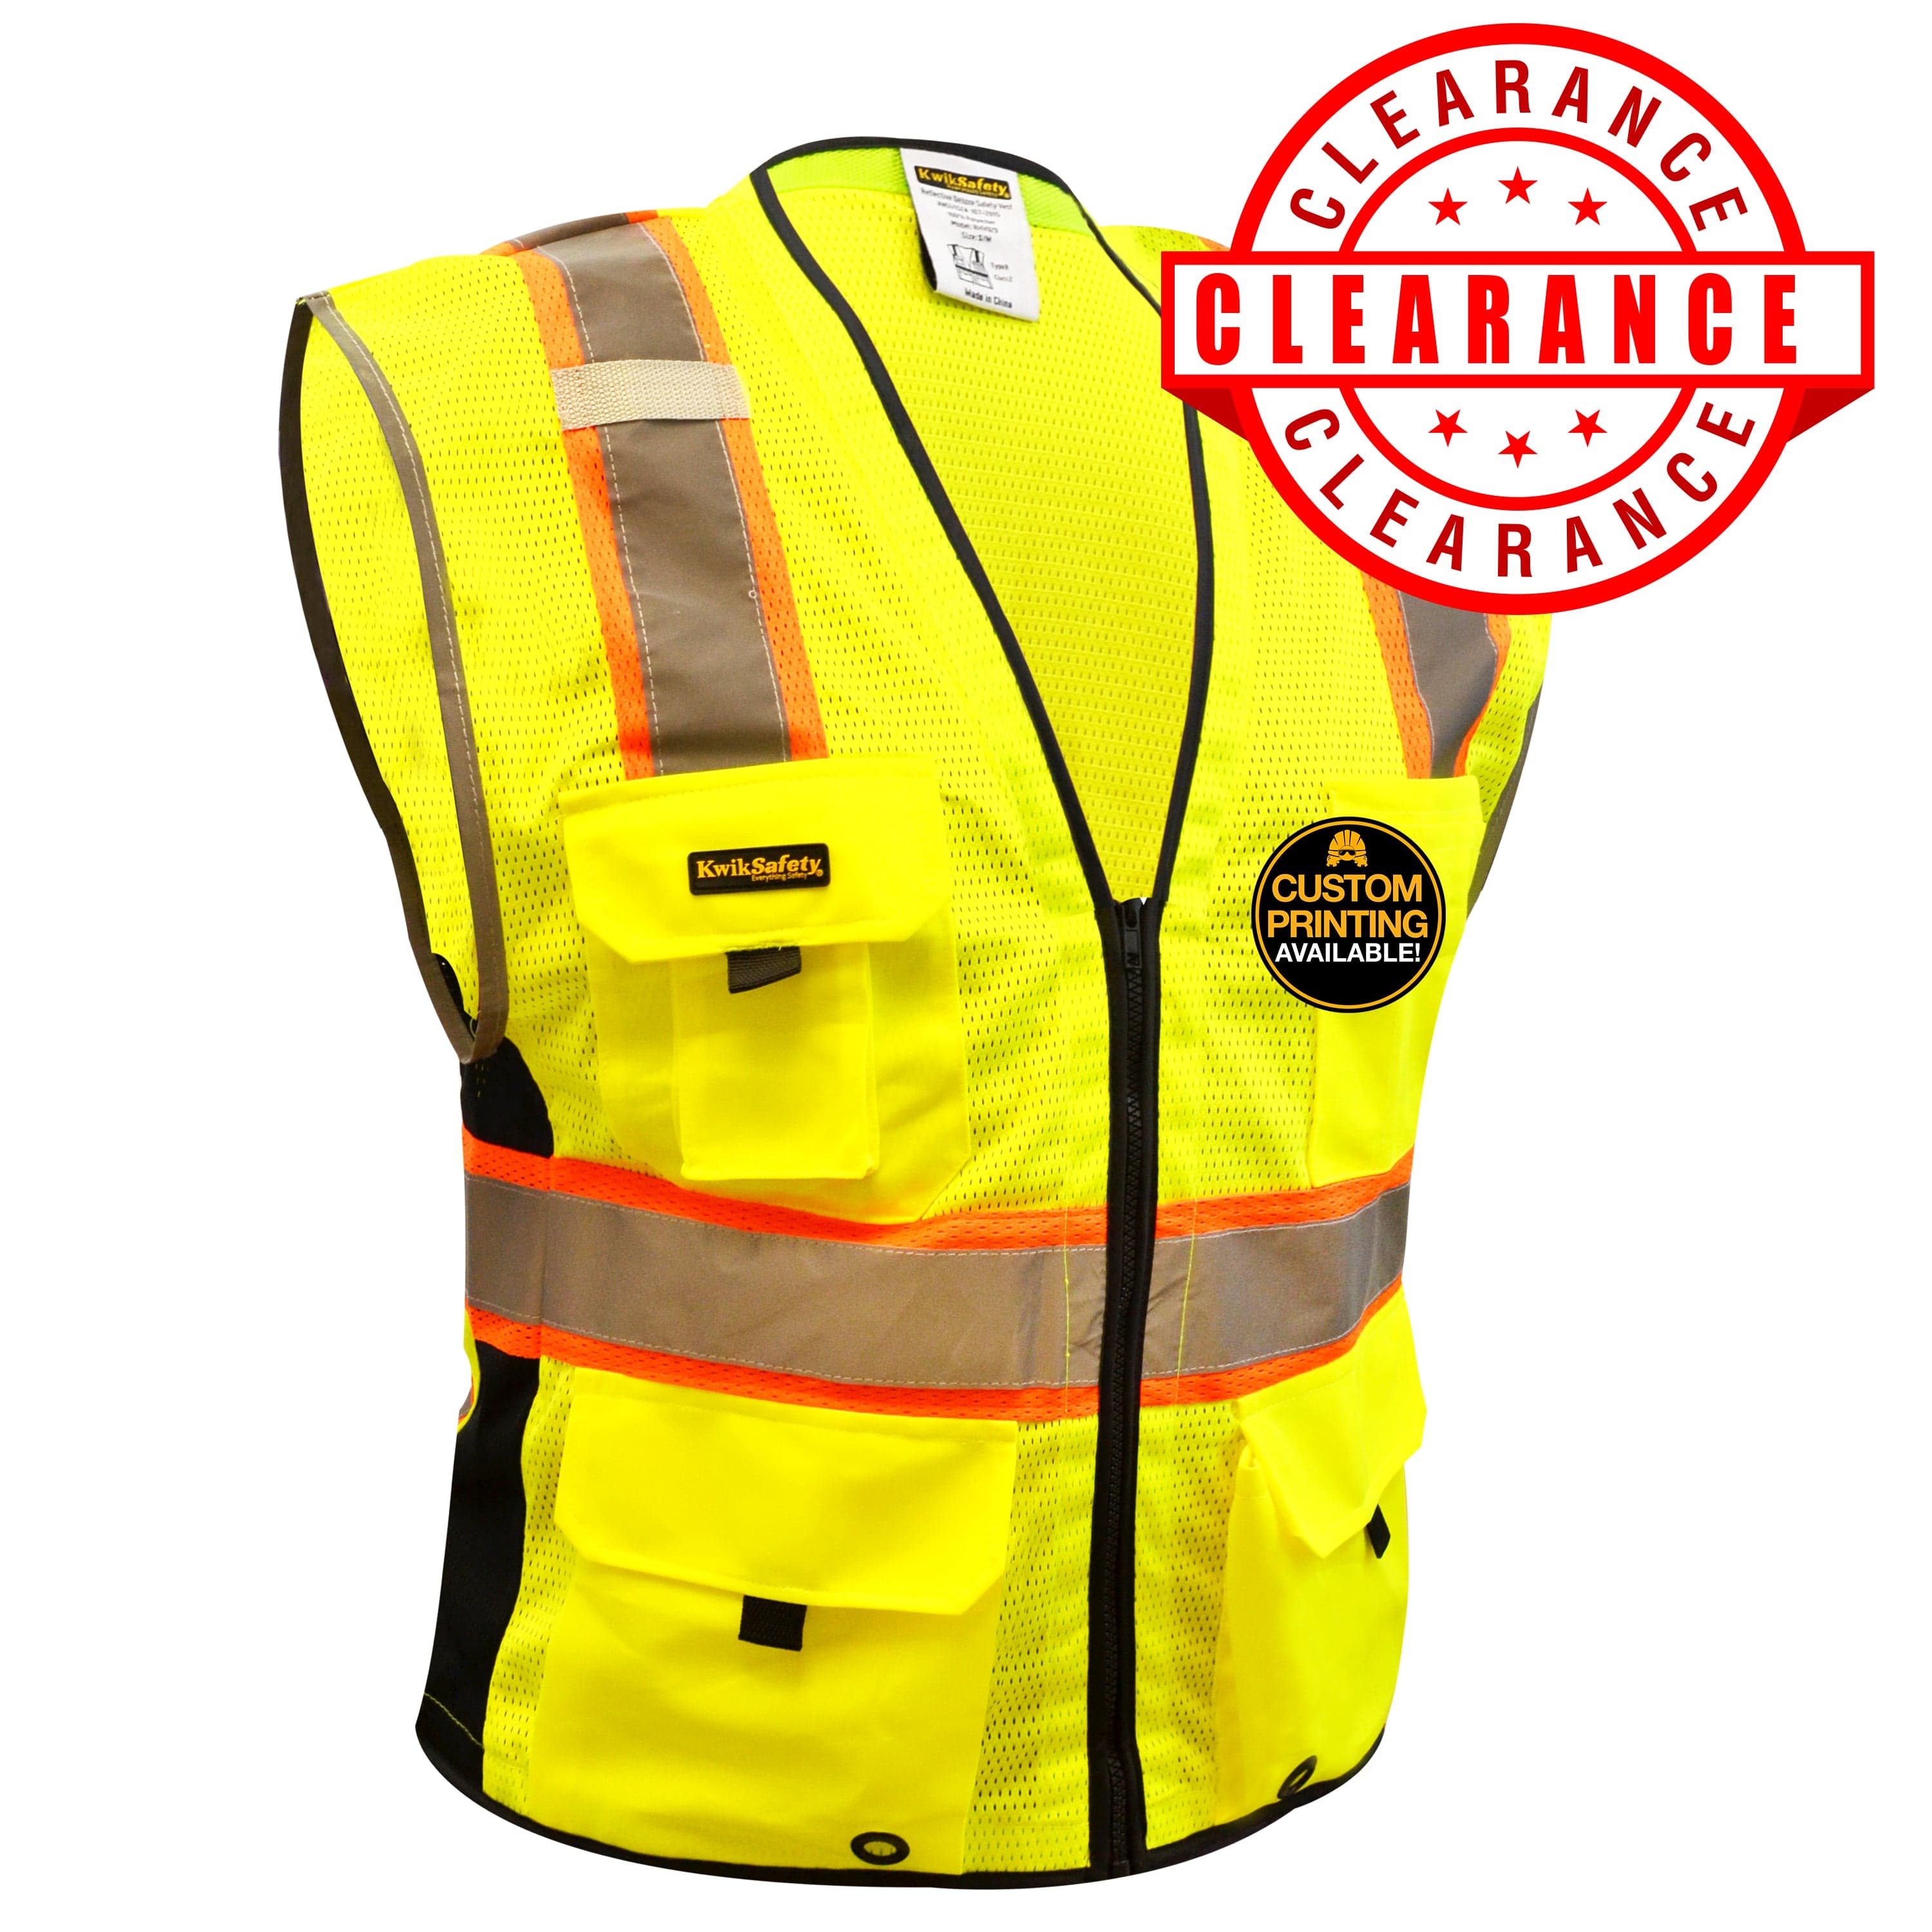 KwikSafety Big Kahuna Hi Vis Reflective ANSI PPE Surveyor Class 2 Safety Vest Size: 2XL/3XL, Color: Yellow